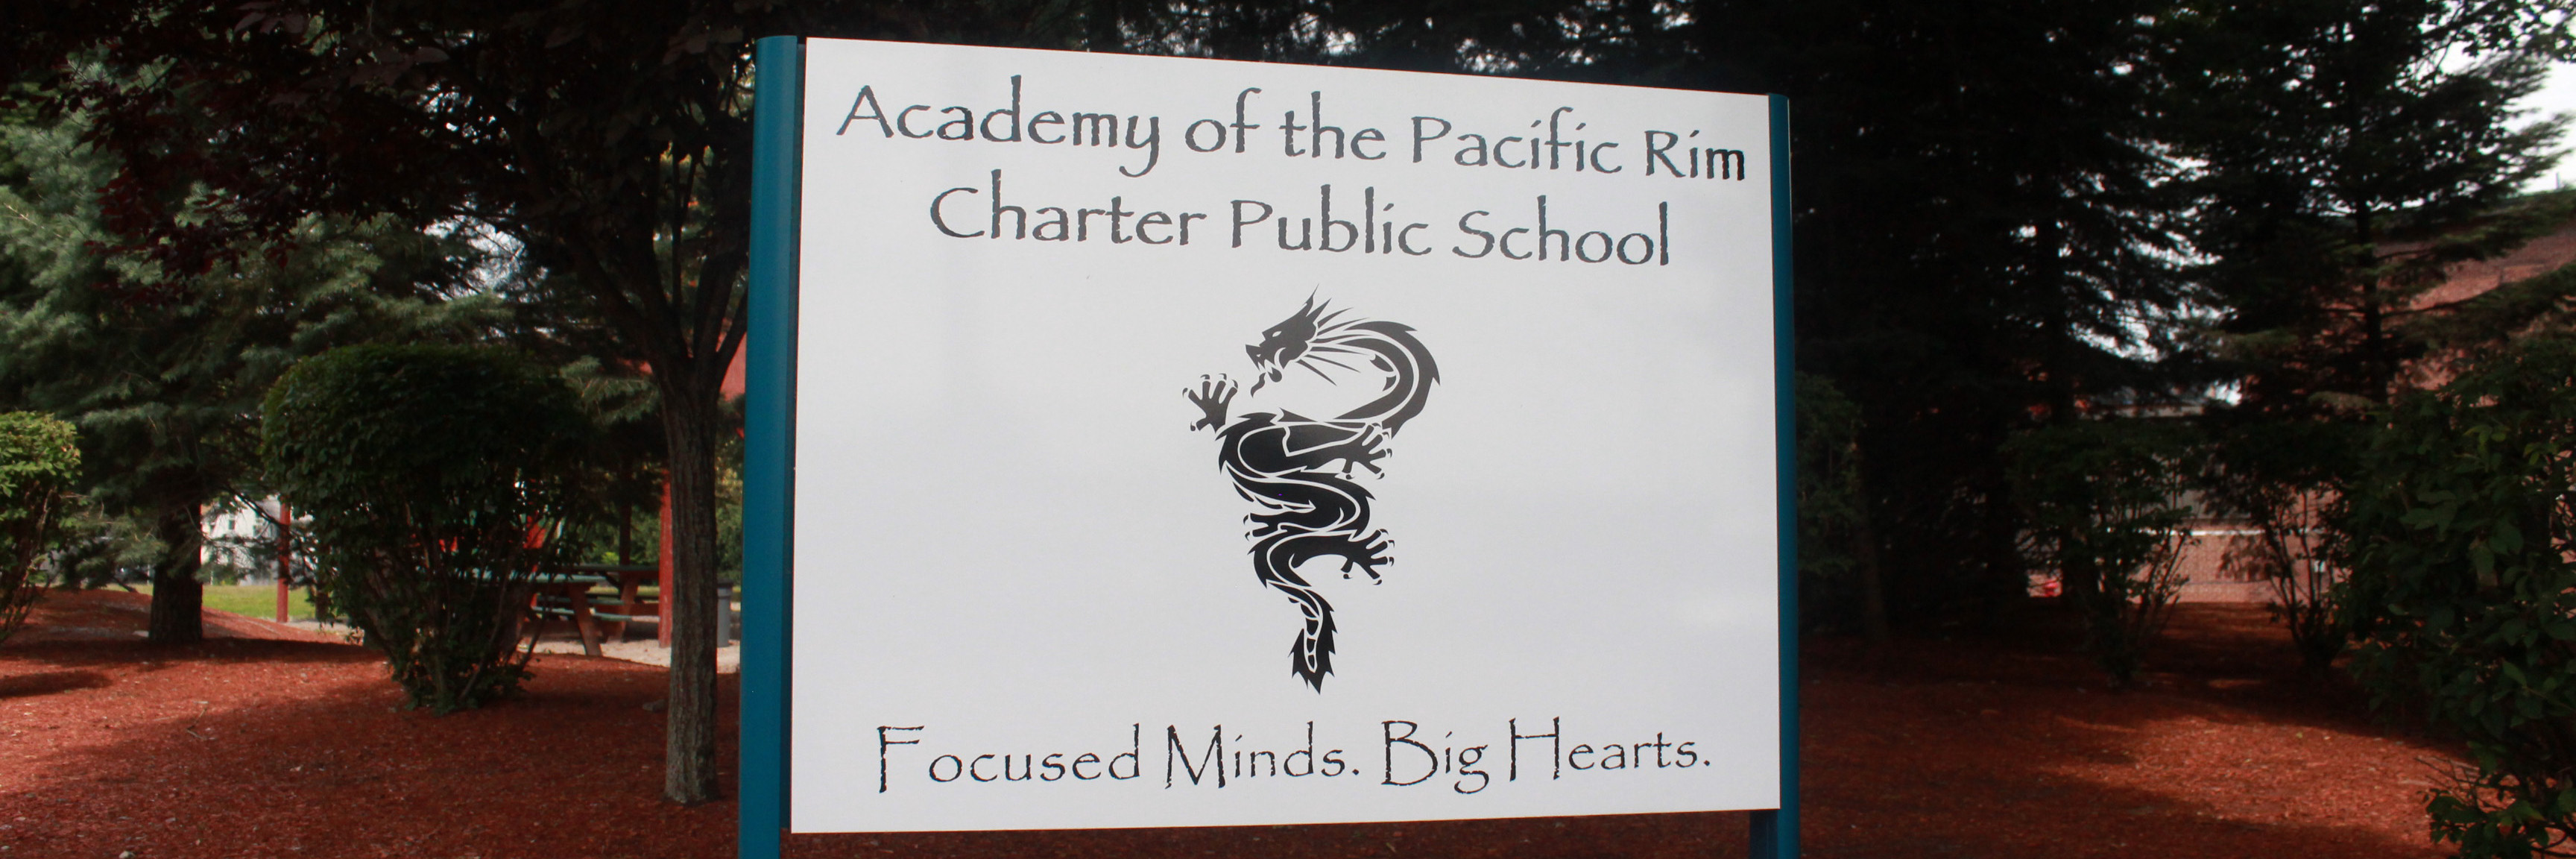 academy-of-the-pacific-rim-charter-public-school-boston-school-finder